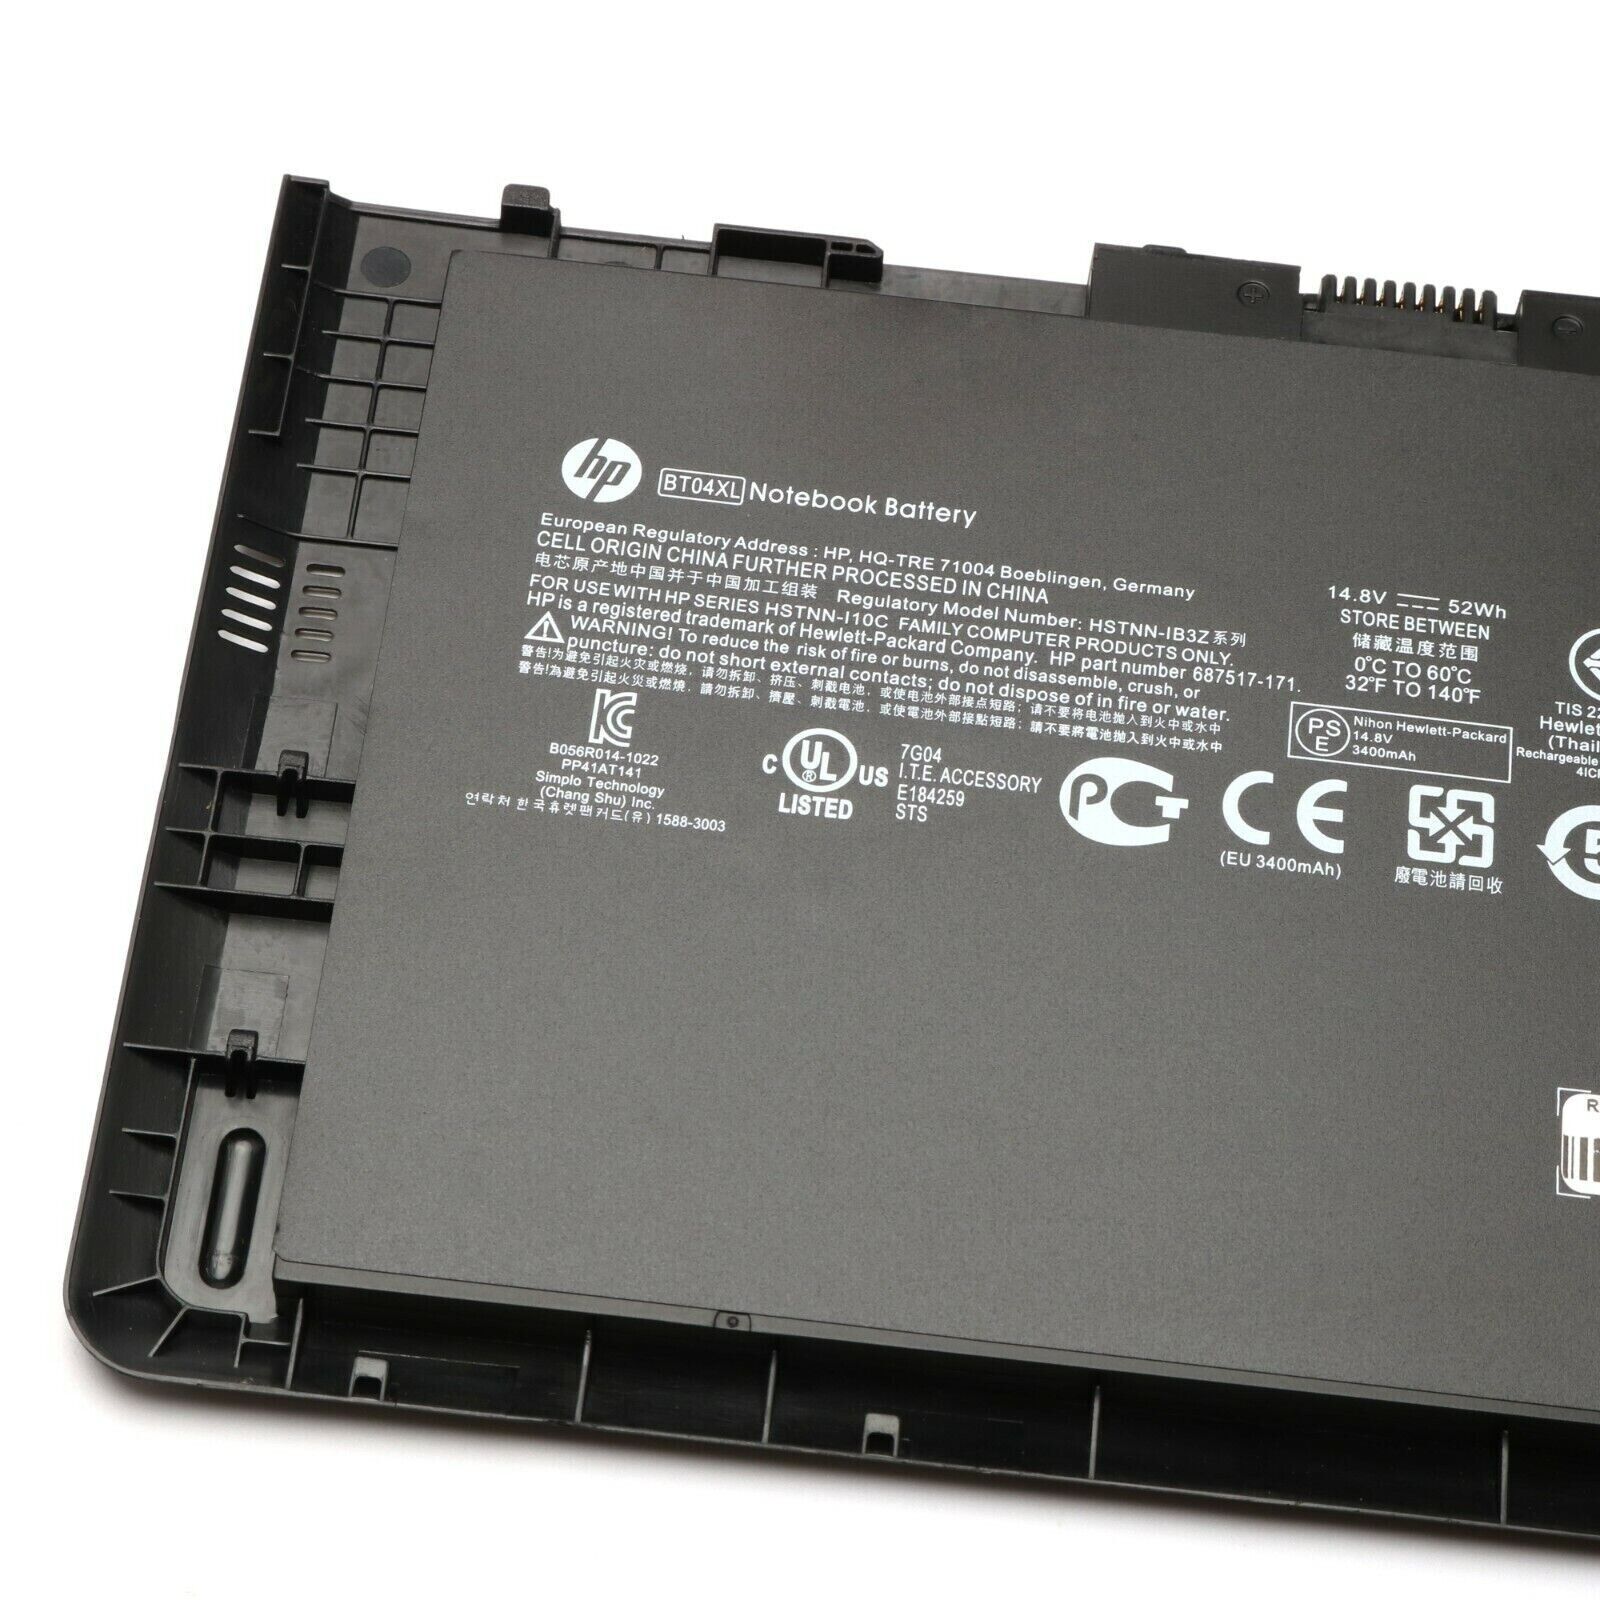 Genuine 52WH BT04XL Battery FOR HP EliteBook Folio 9470M HSTNN-DB3Z 687517-171